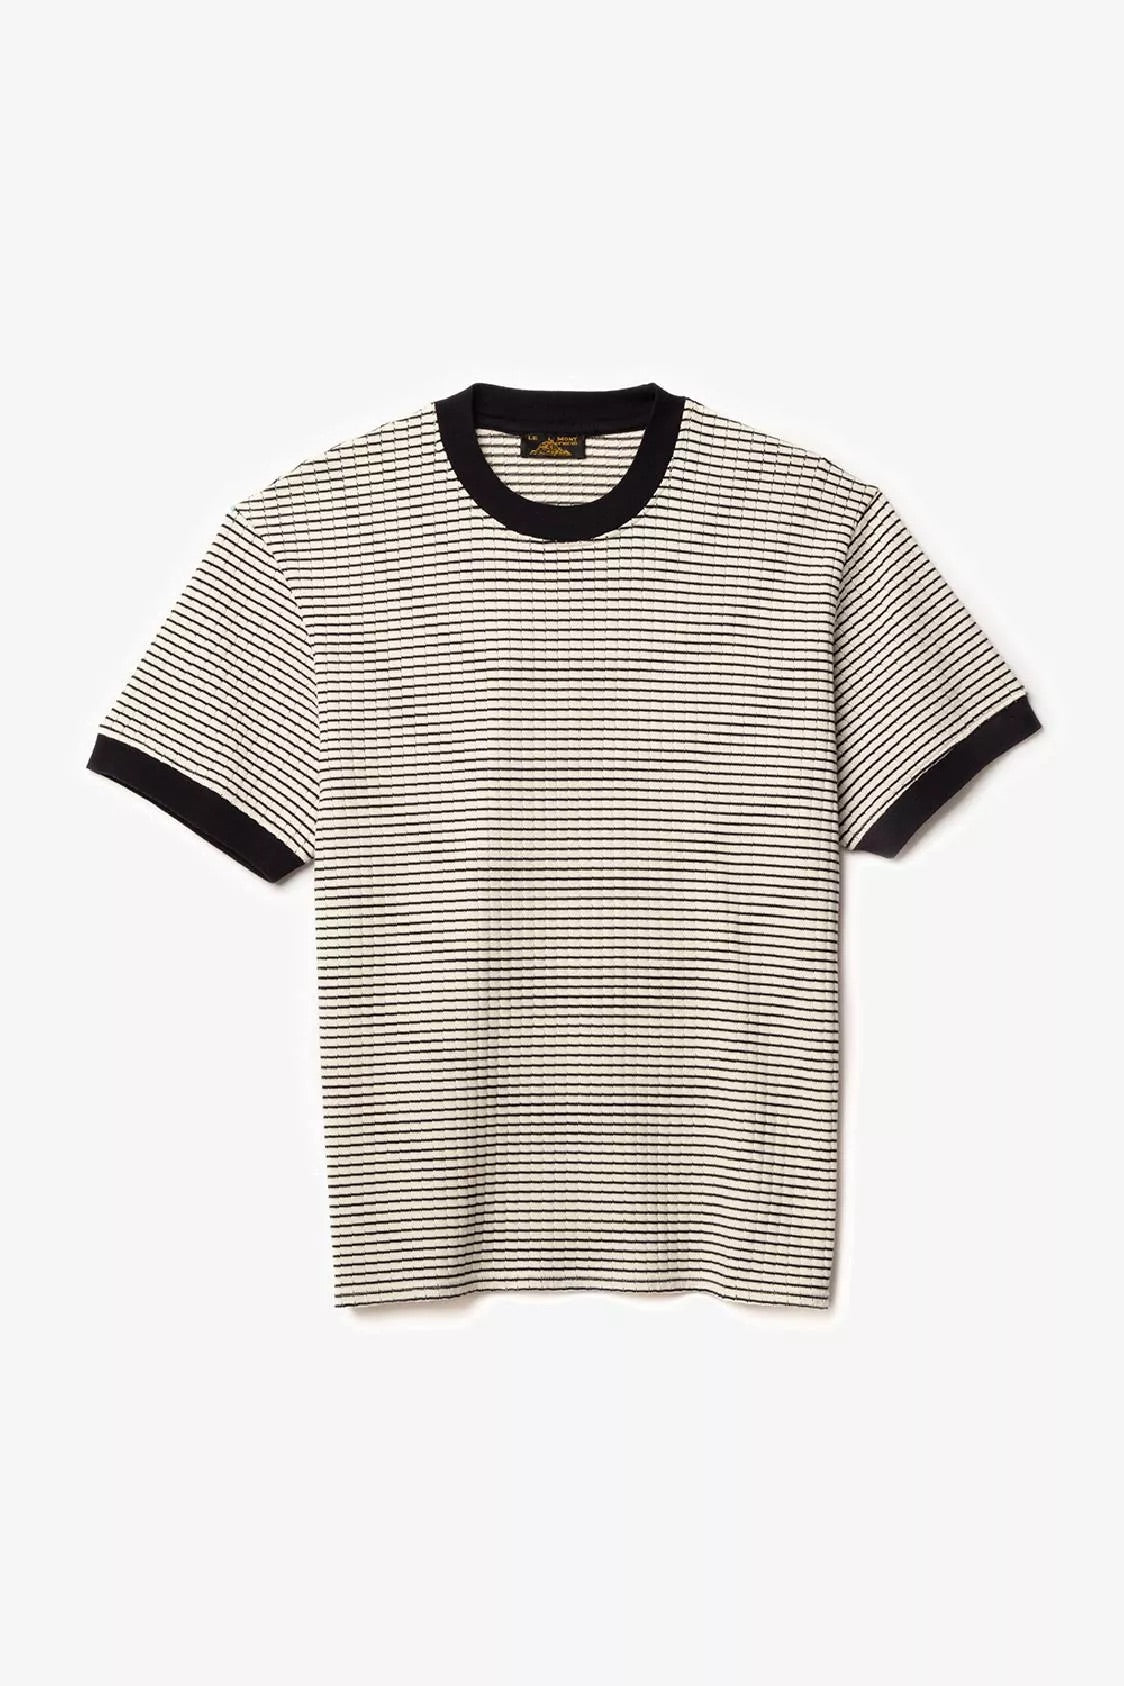 Telo Striped T-Shirt Navy